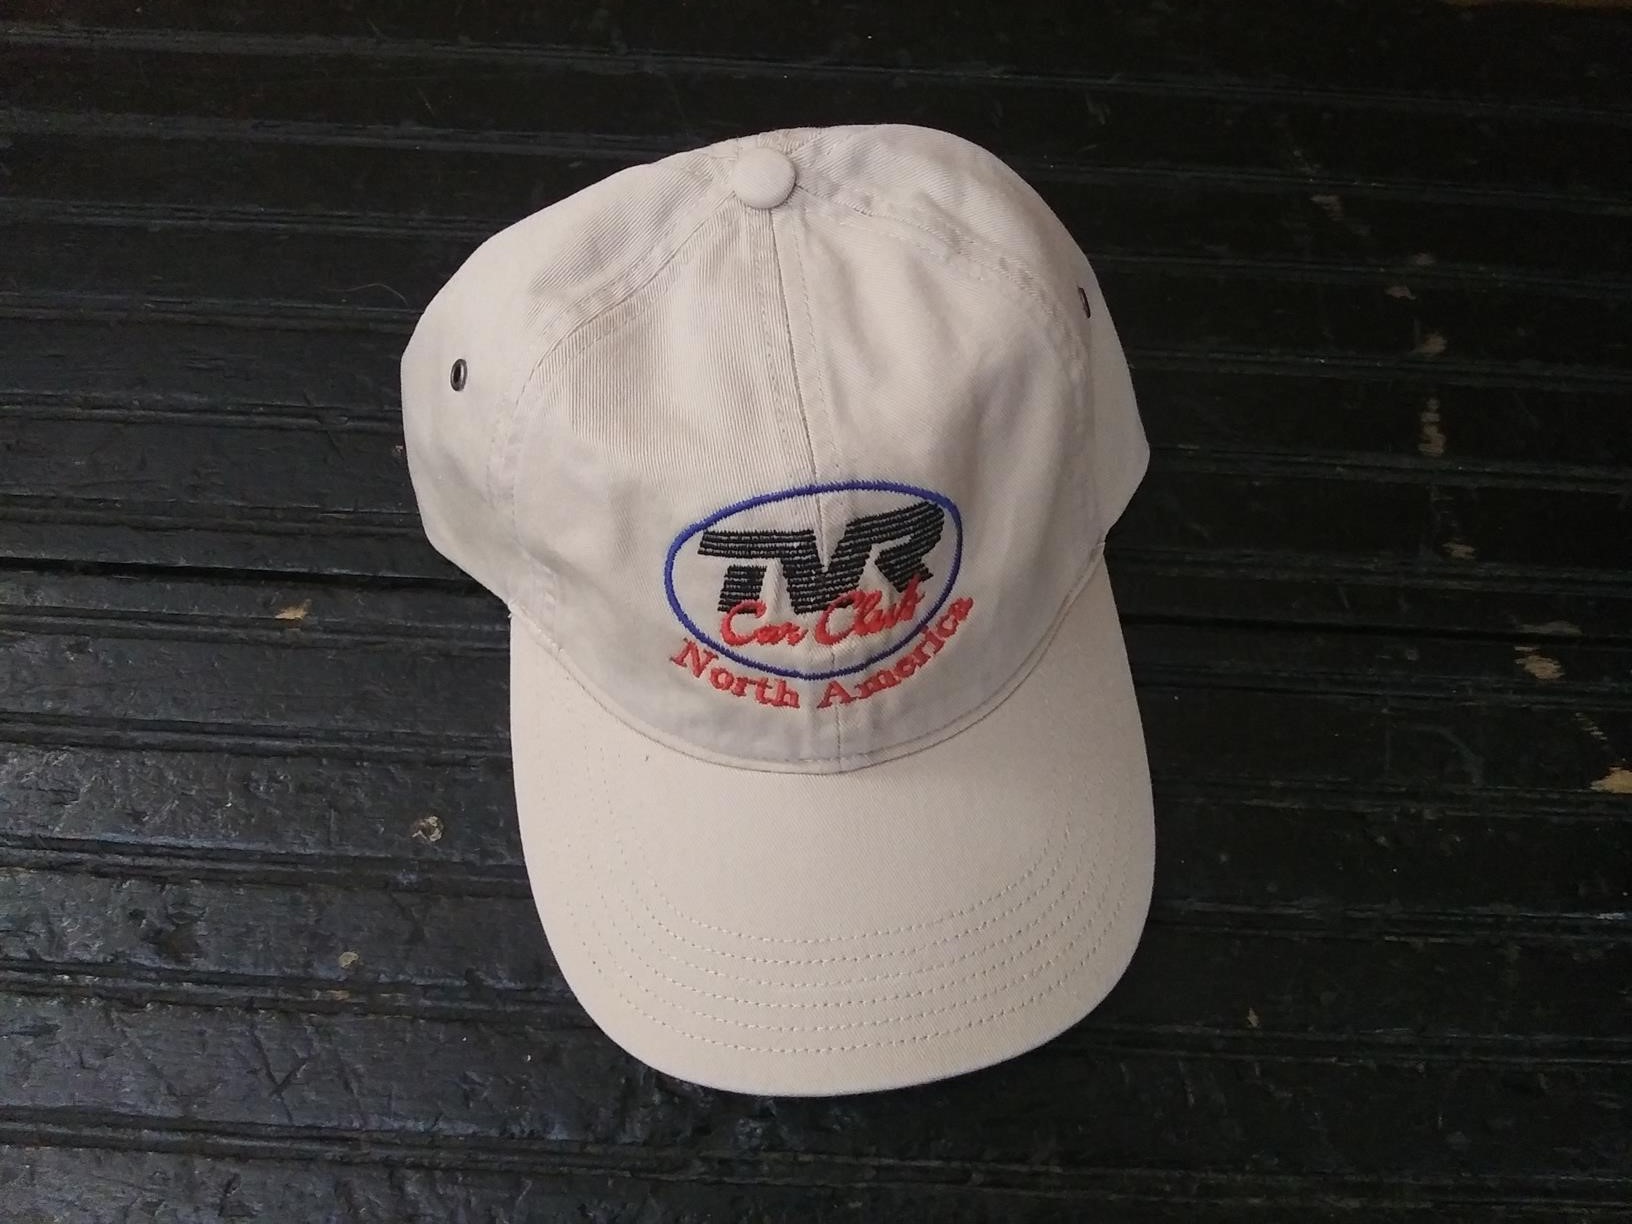 TVR Car Club Cap